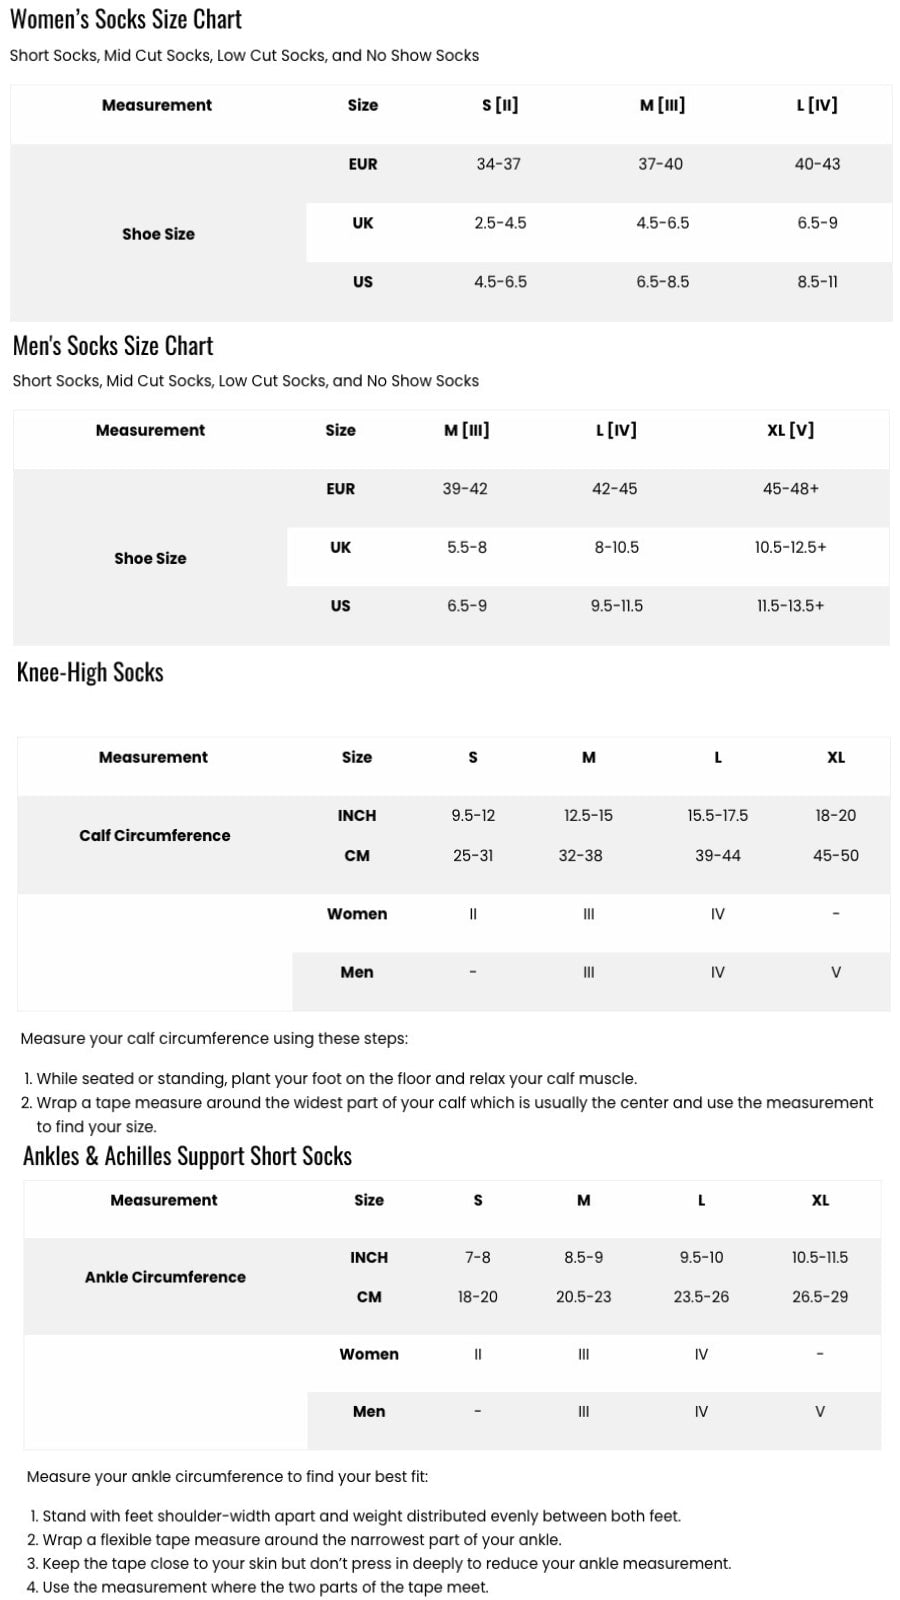 CEP All Day Merino Mid Cut Socks, Women Size Chart - SKU WP4CC62